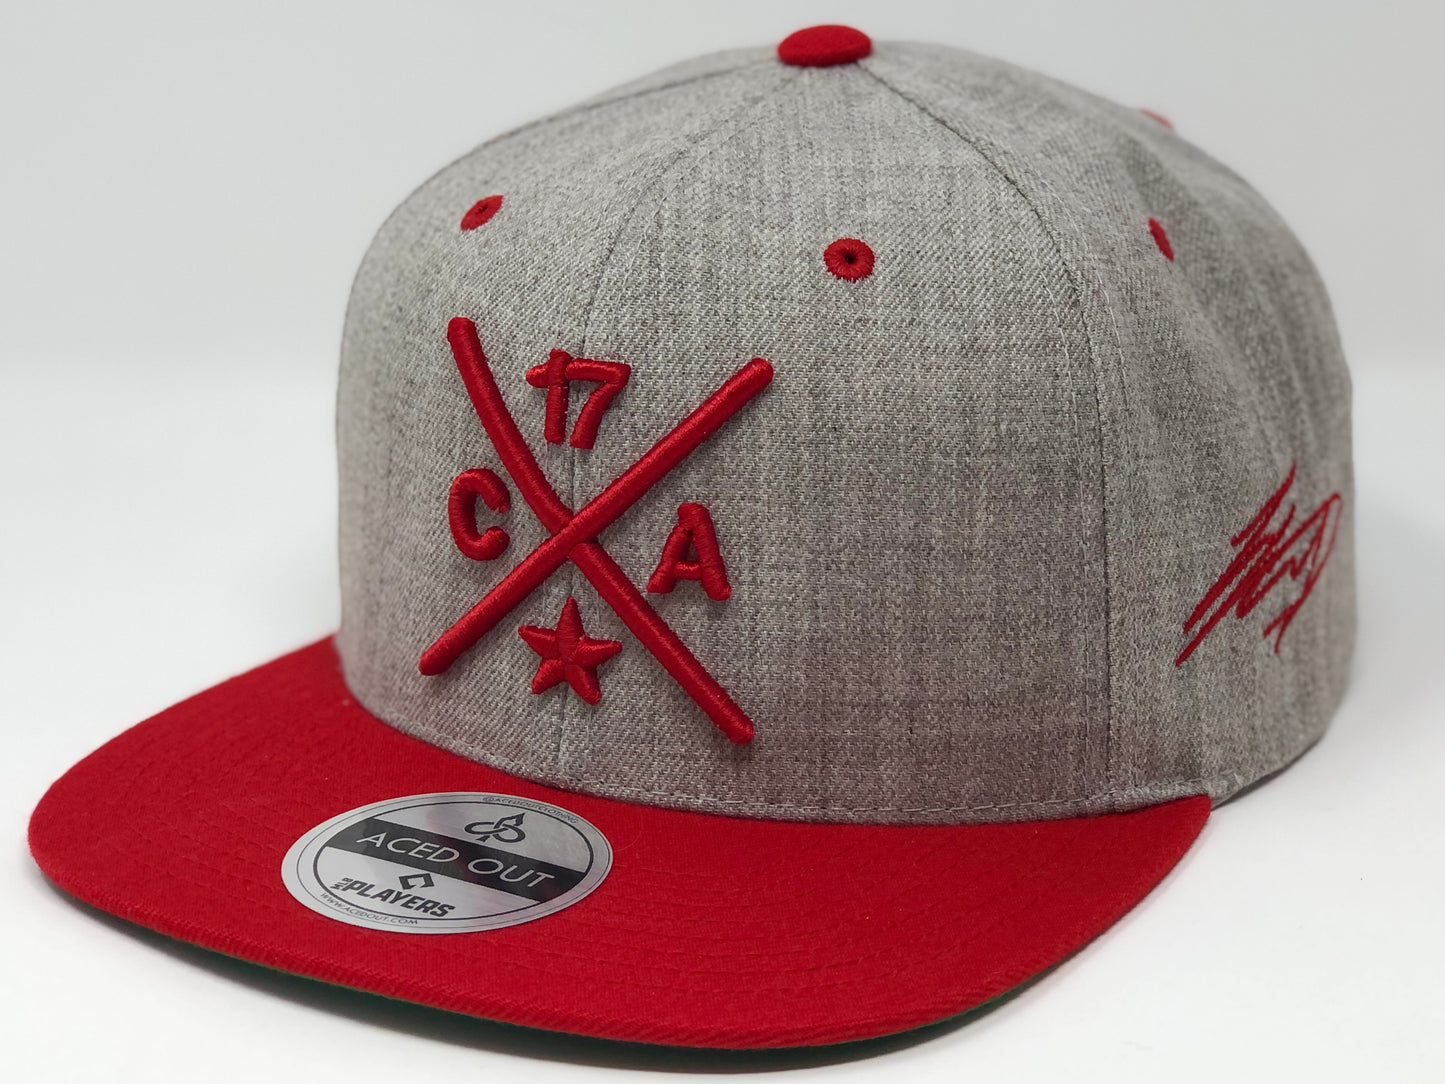 Shohei Ohtani Compass Hat - Grey/Red Snapback